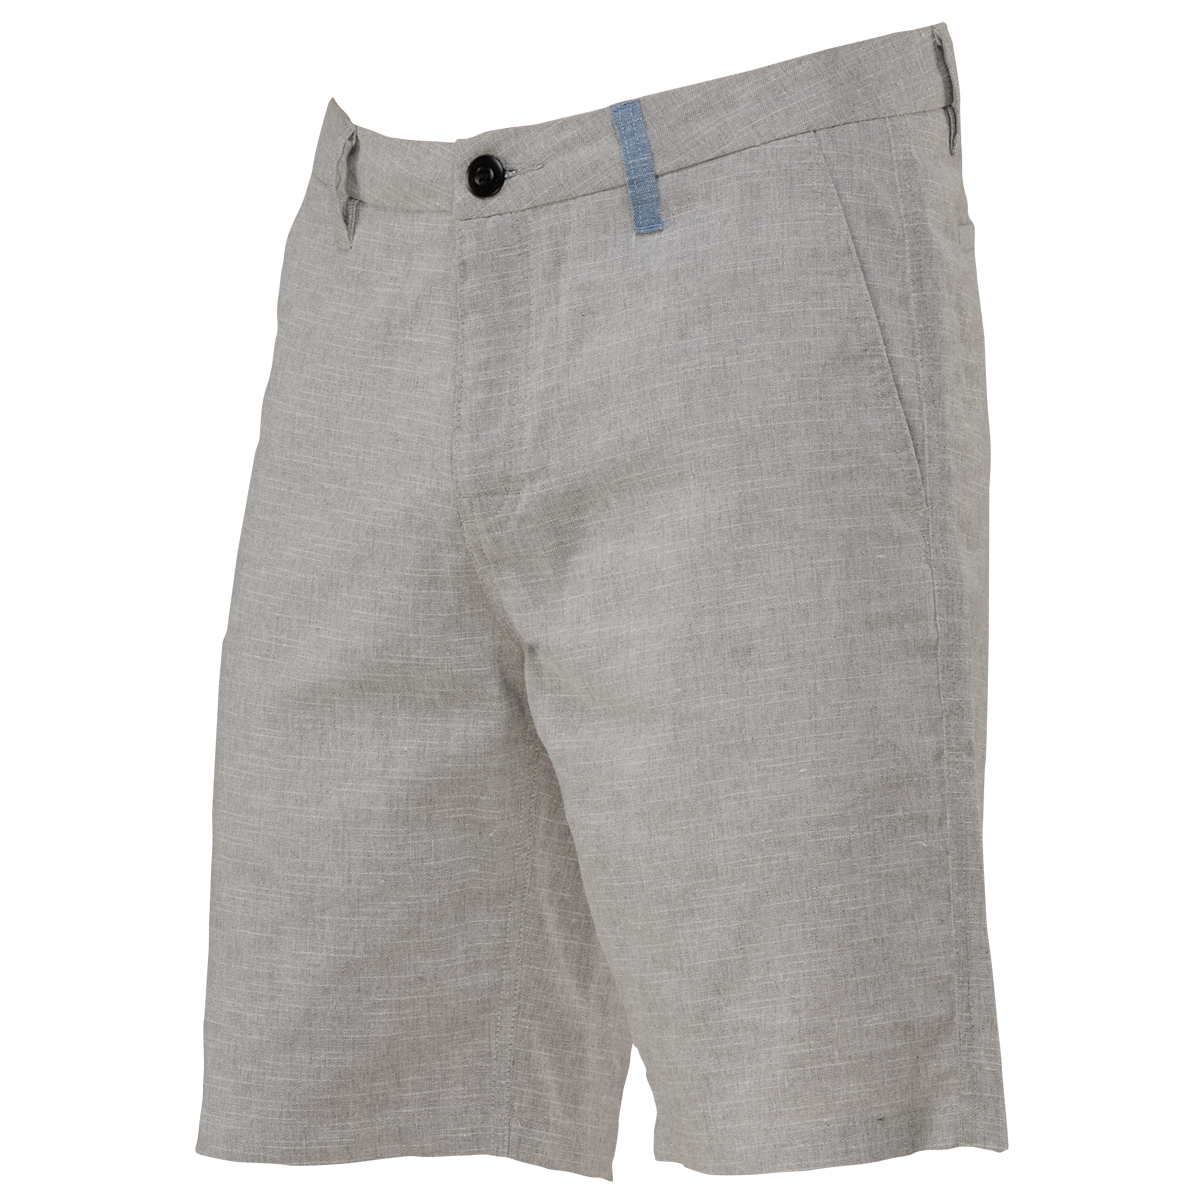 Dye Trader Shorts - Light Gray / Blue